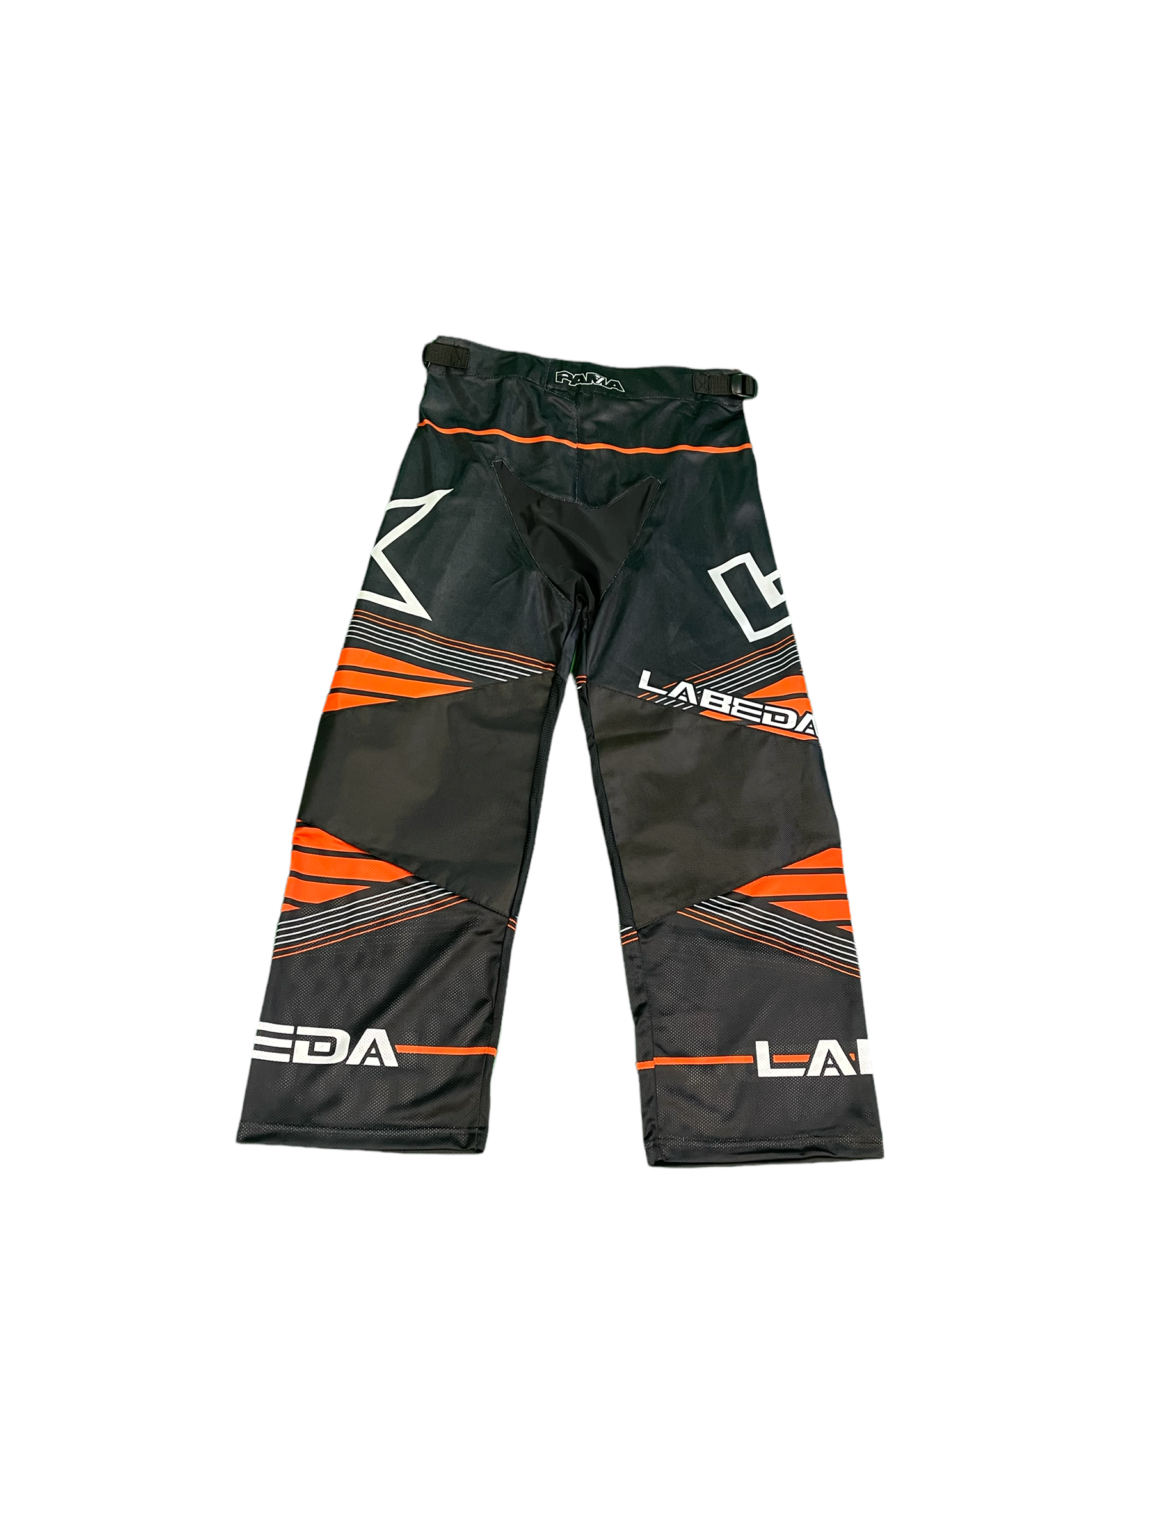 Labeda Hockey Pant Pama 7.2 SR - Black/Orange/Angle